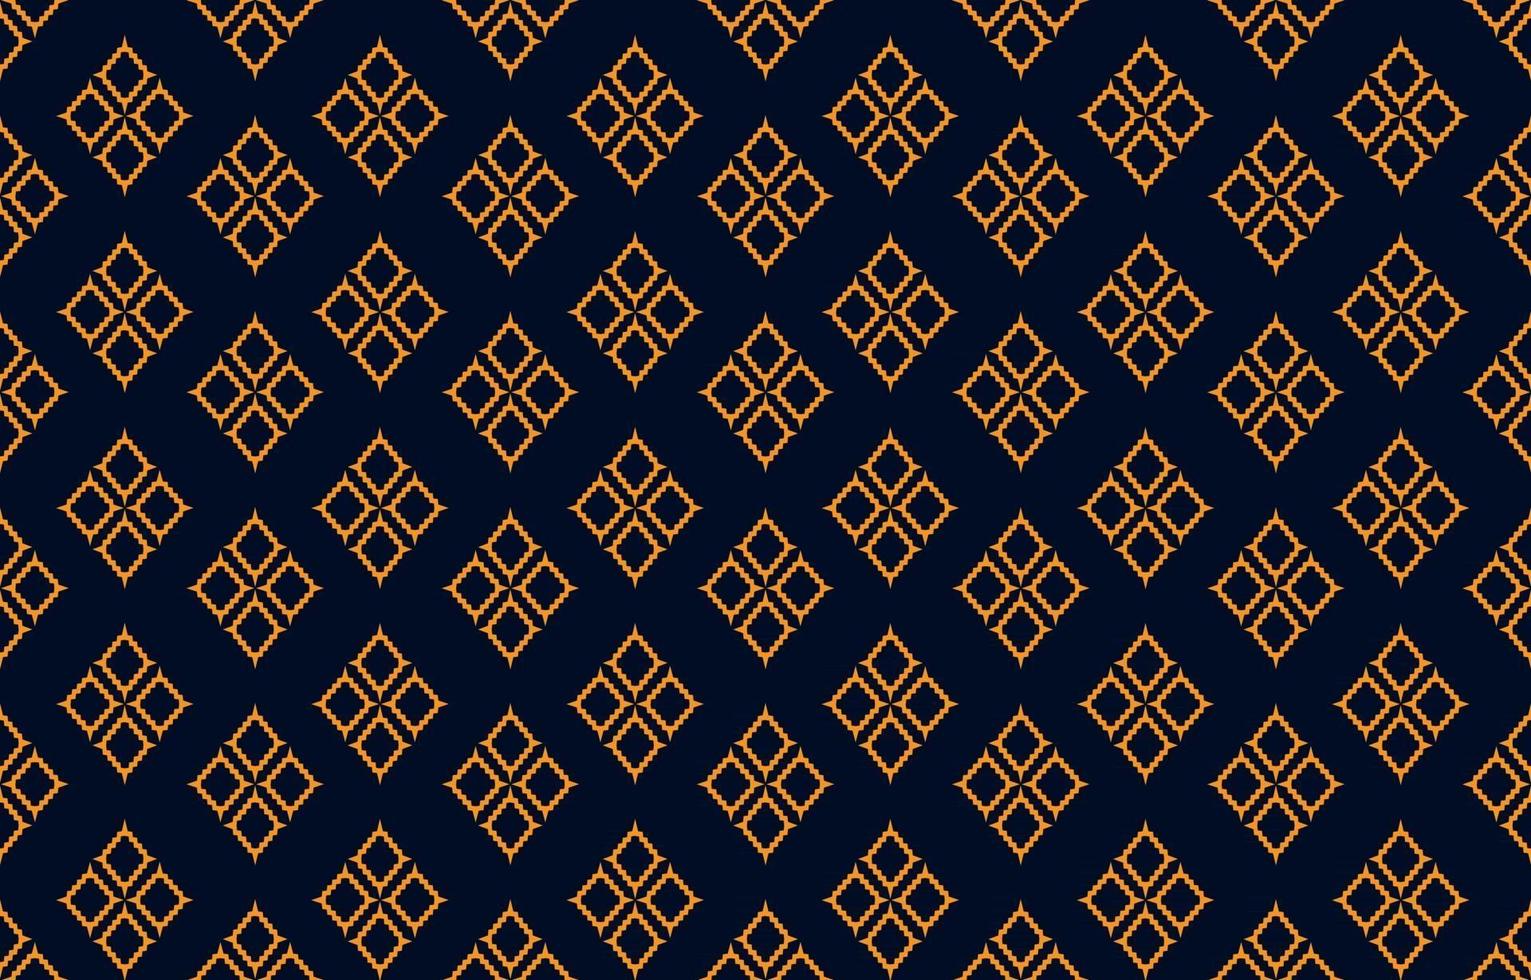 Fabric pattern orange diamond shape on dark blue vintage seamless background vector illustration